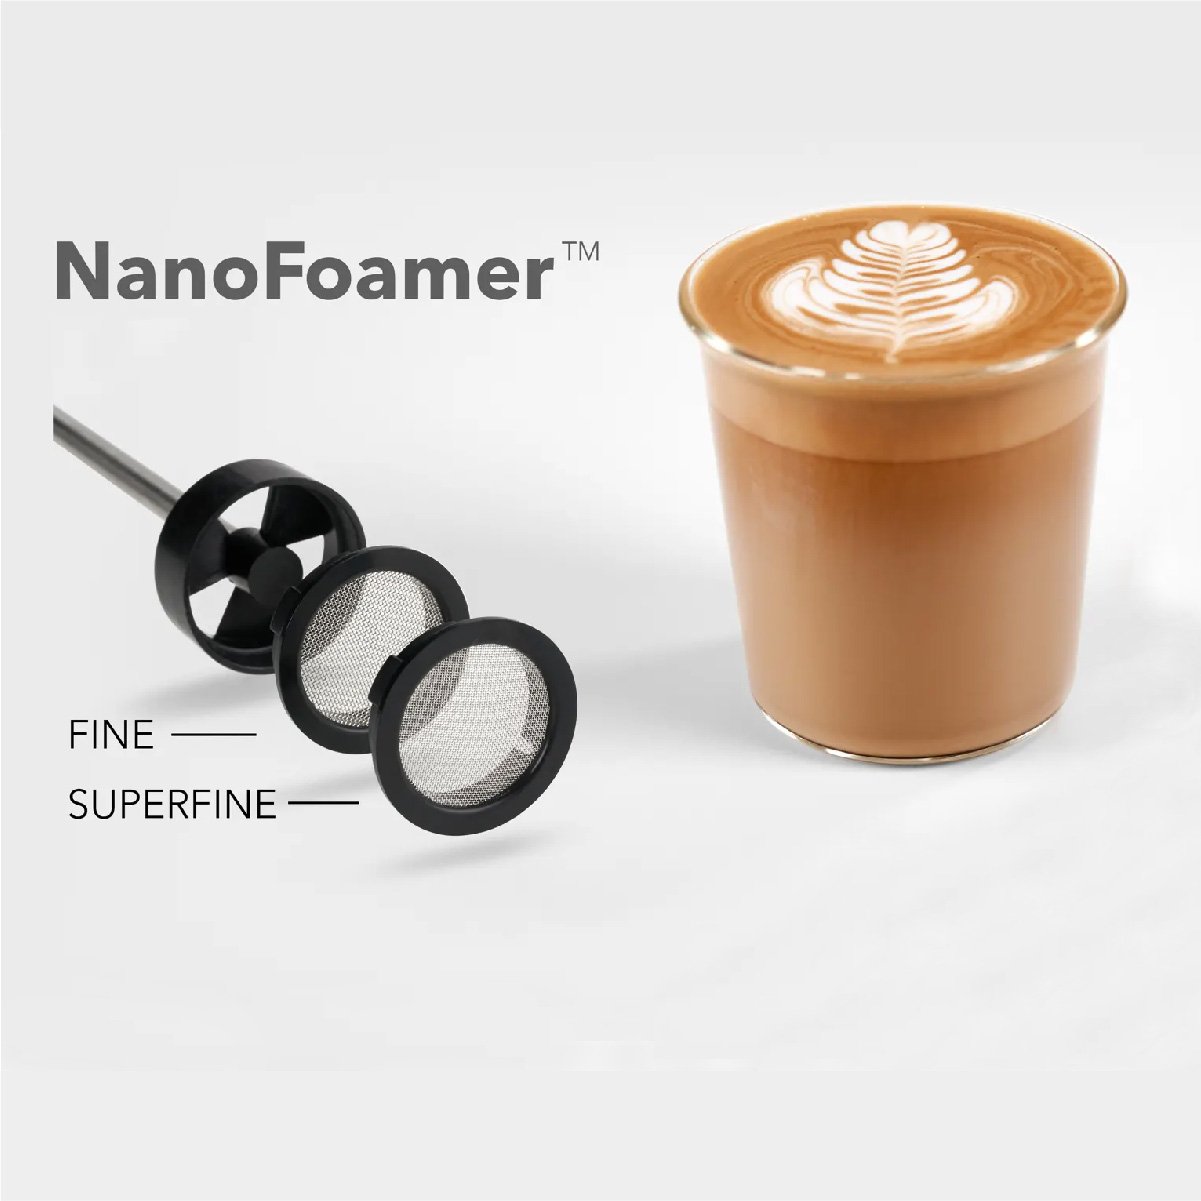 subminimal NanoFoamer review - The Gadgeteer